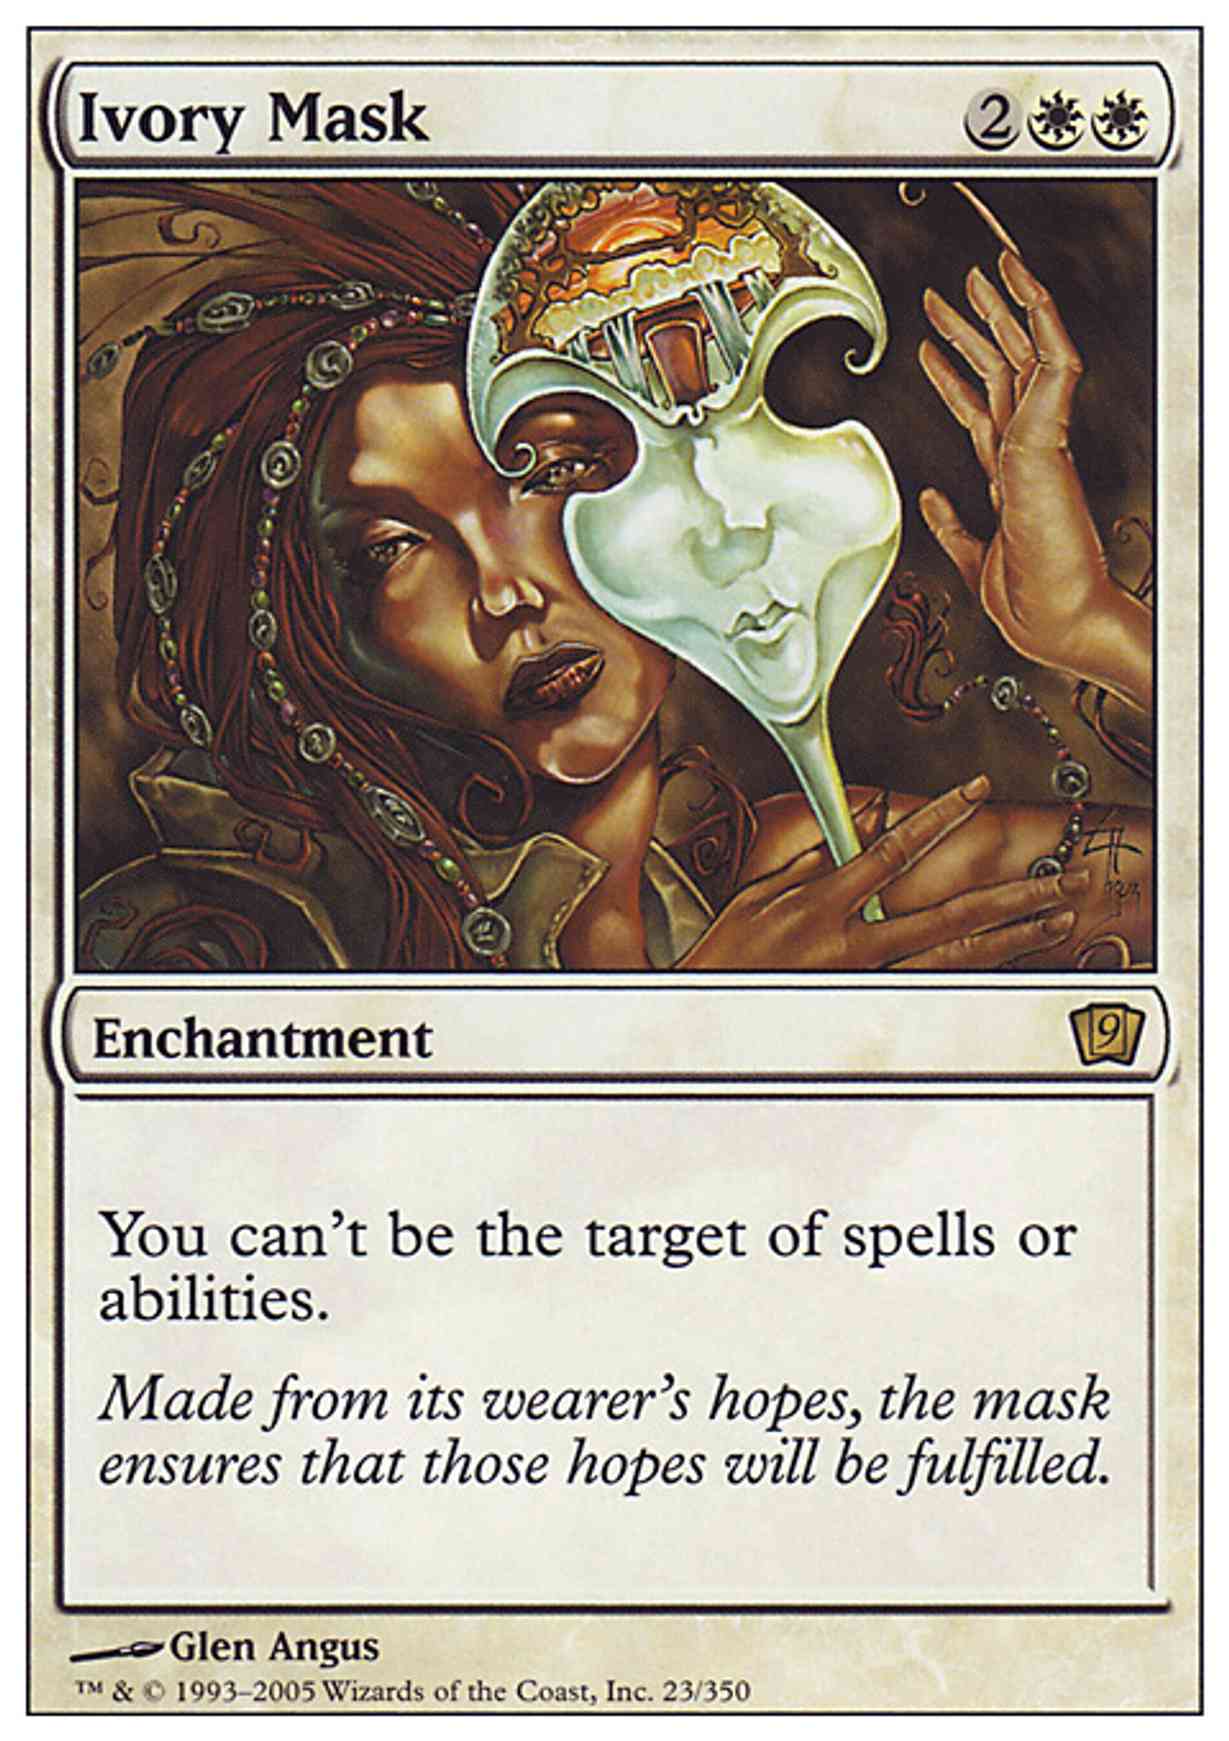 Ivory Mask magic card front